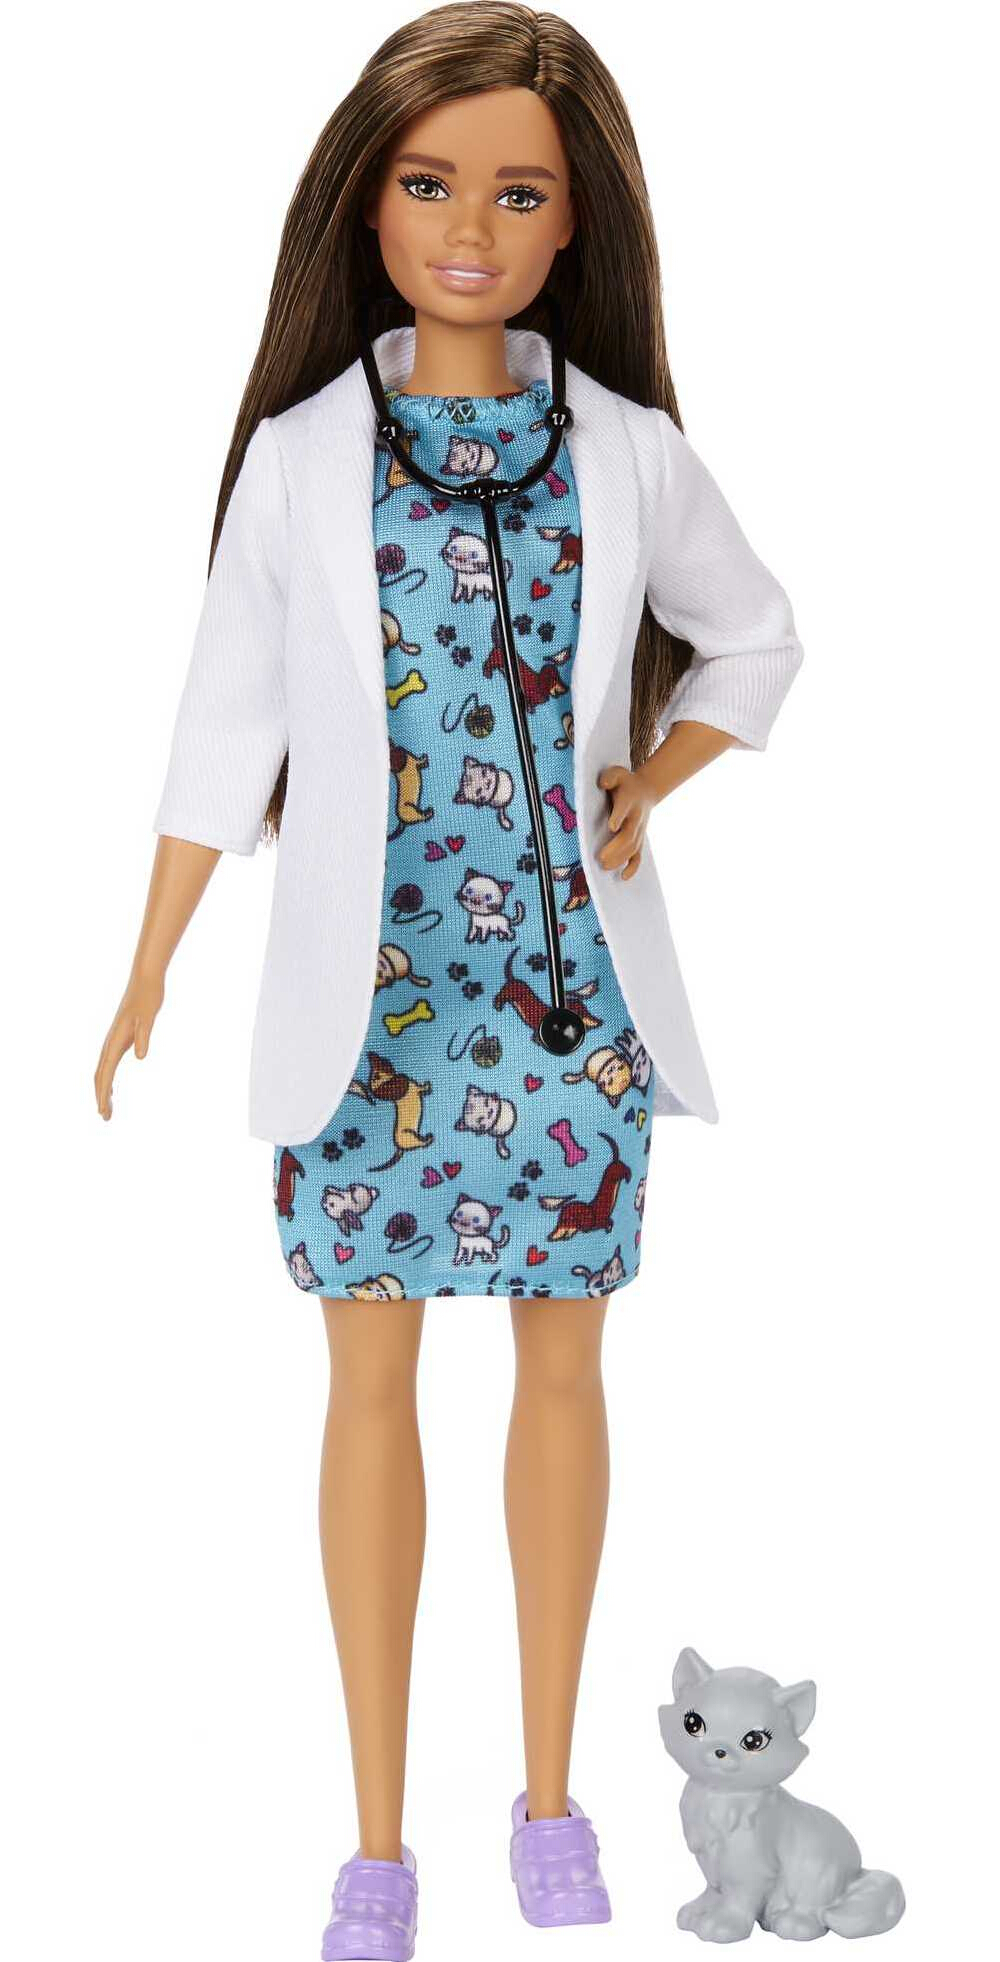 Barbie Pet Vet Fashion Doll Brunette with Medical Coat, Kitten Patient & Accessories - image 1 of 6